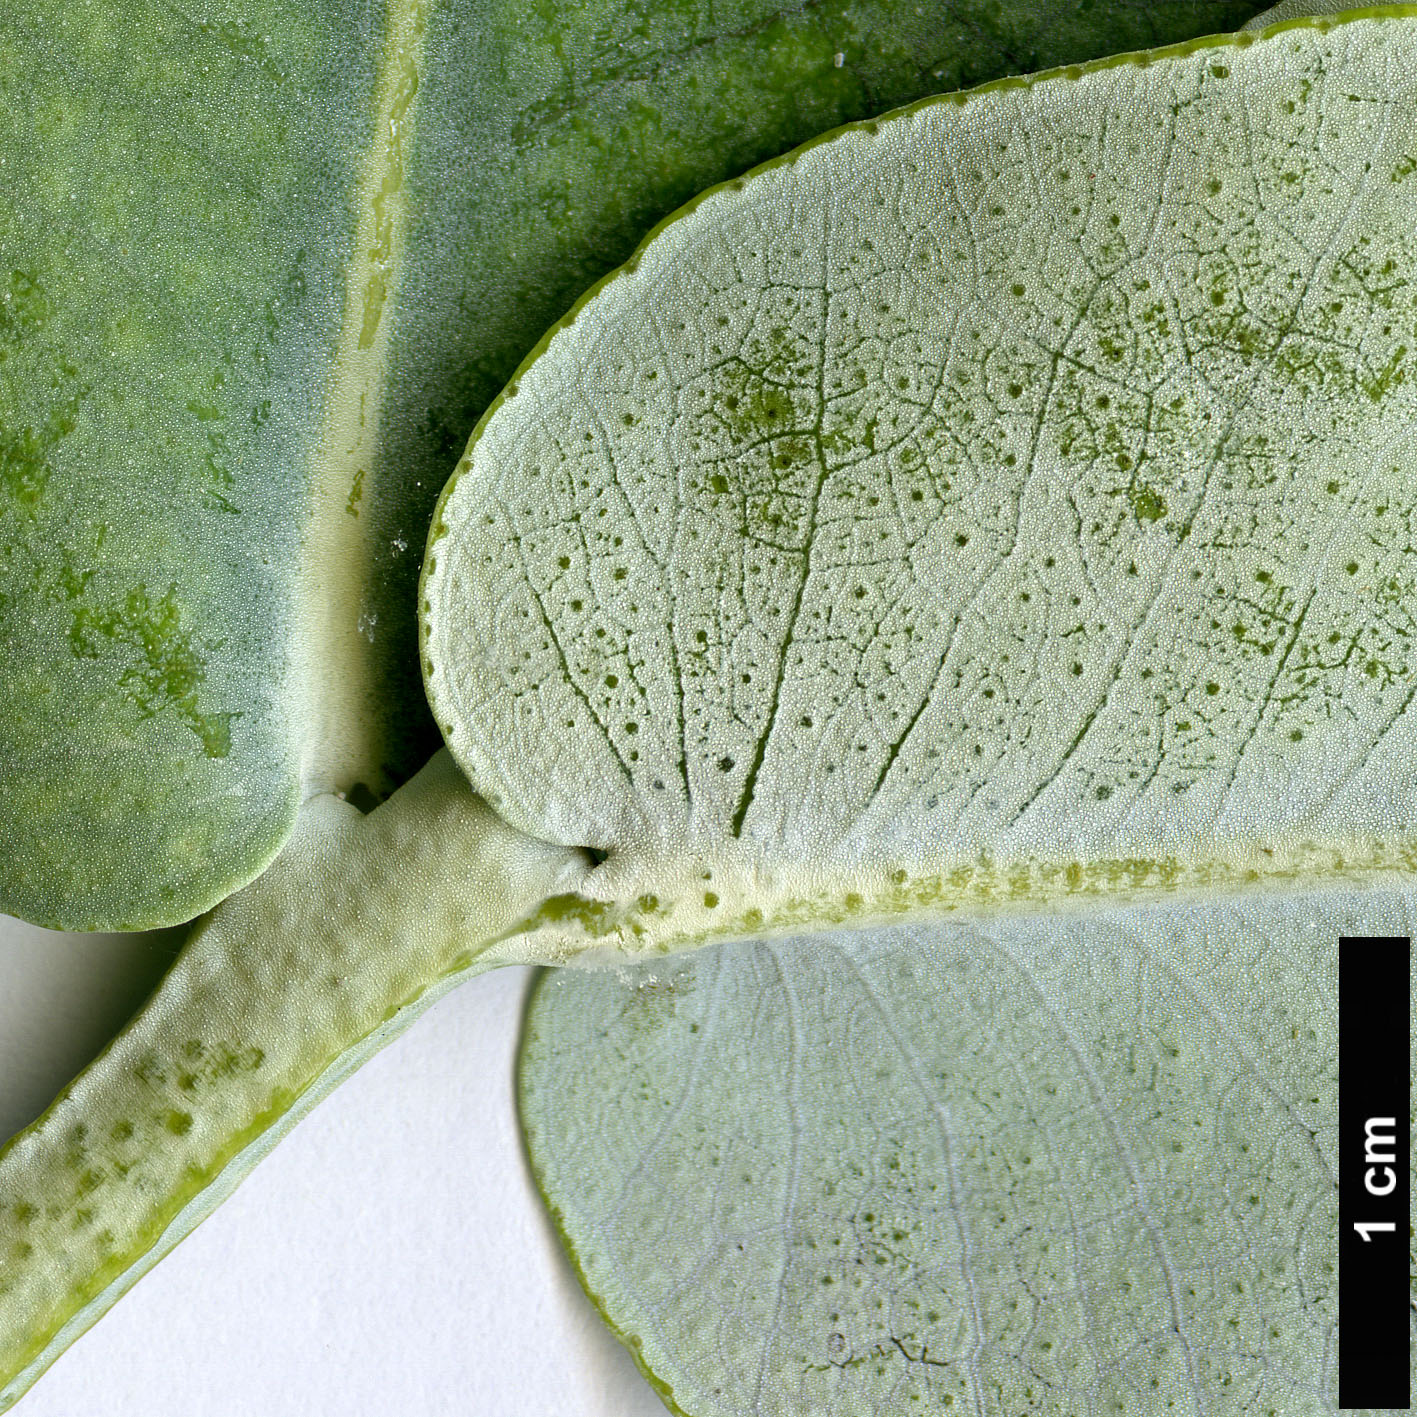 High resolution image: Family: Myrtaceae - Genus: Eucalyptus - Taxon: globulus